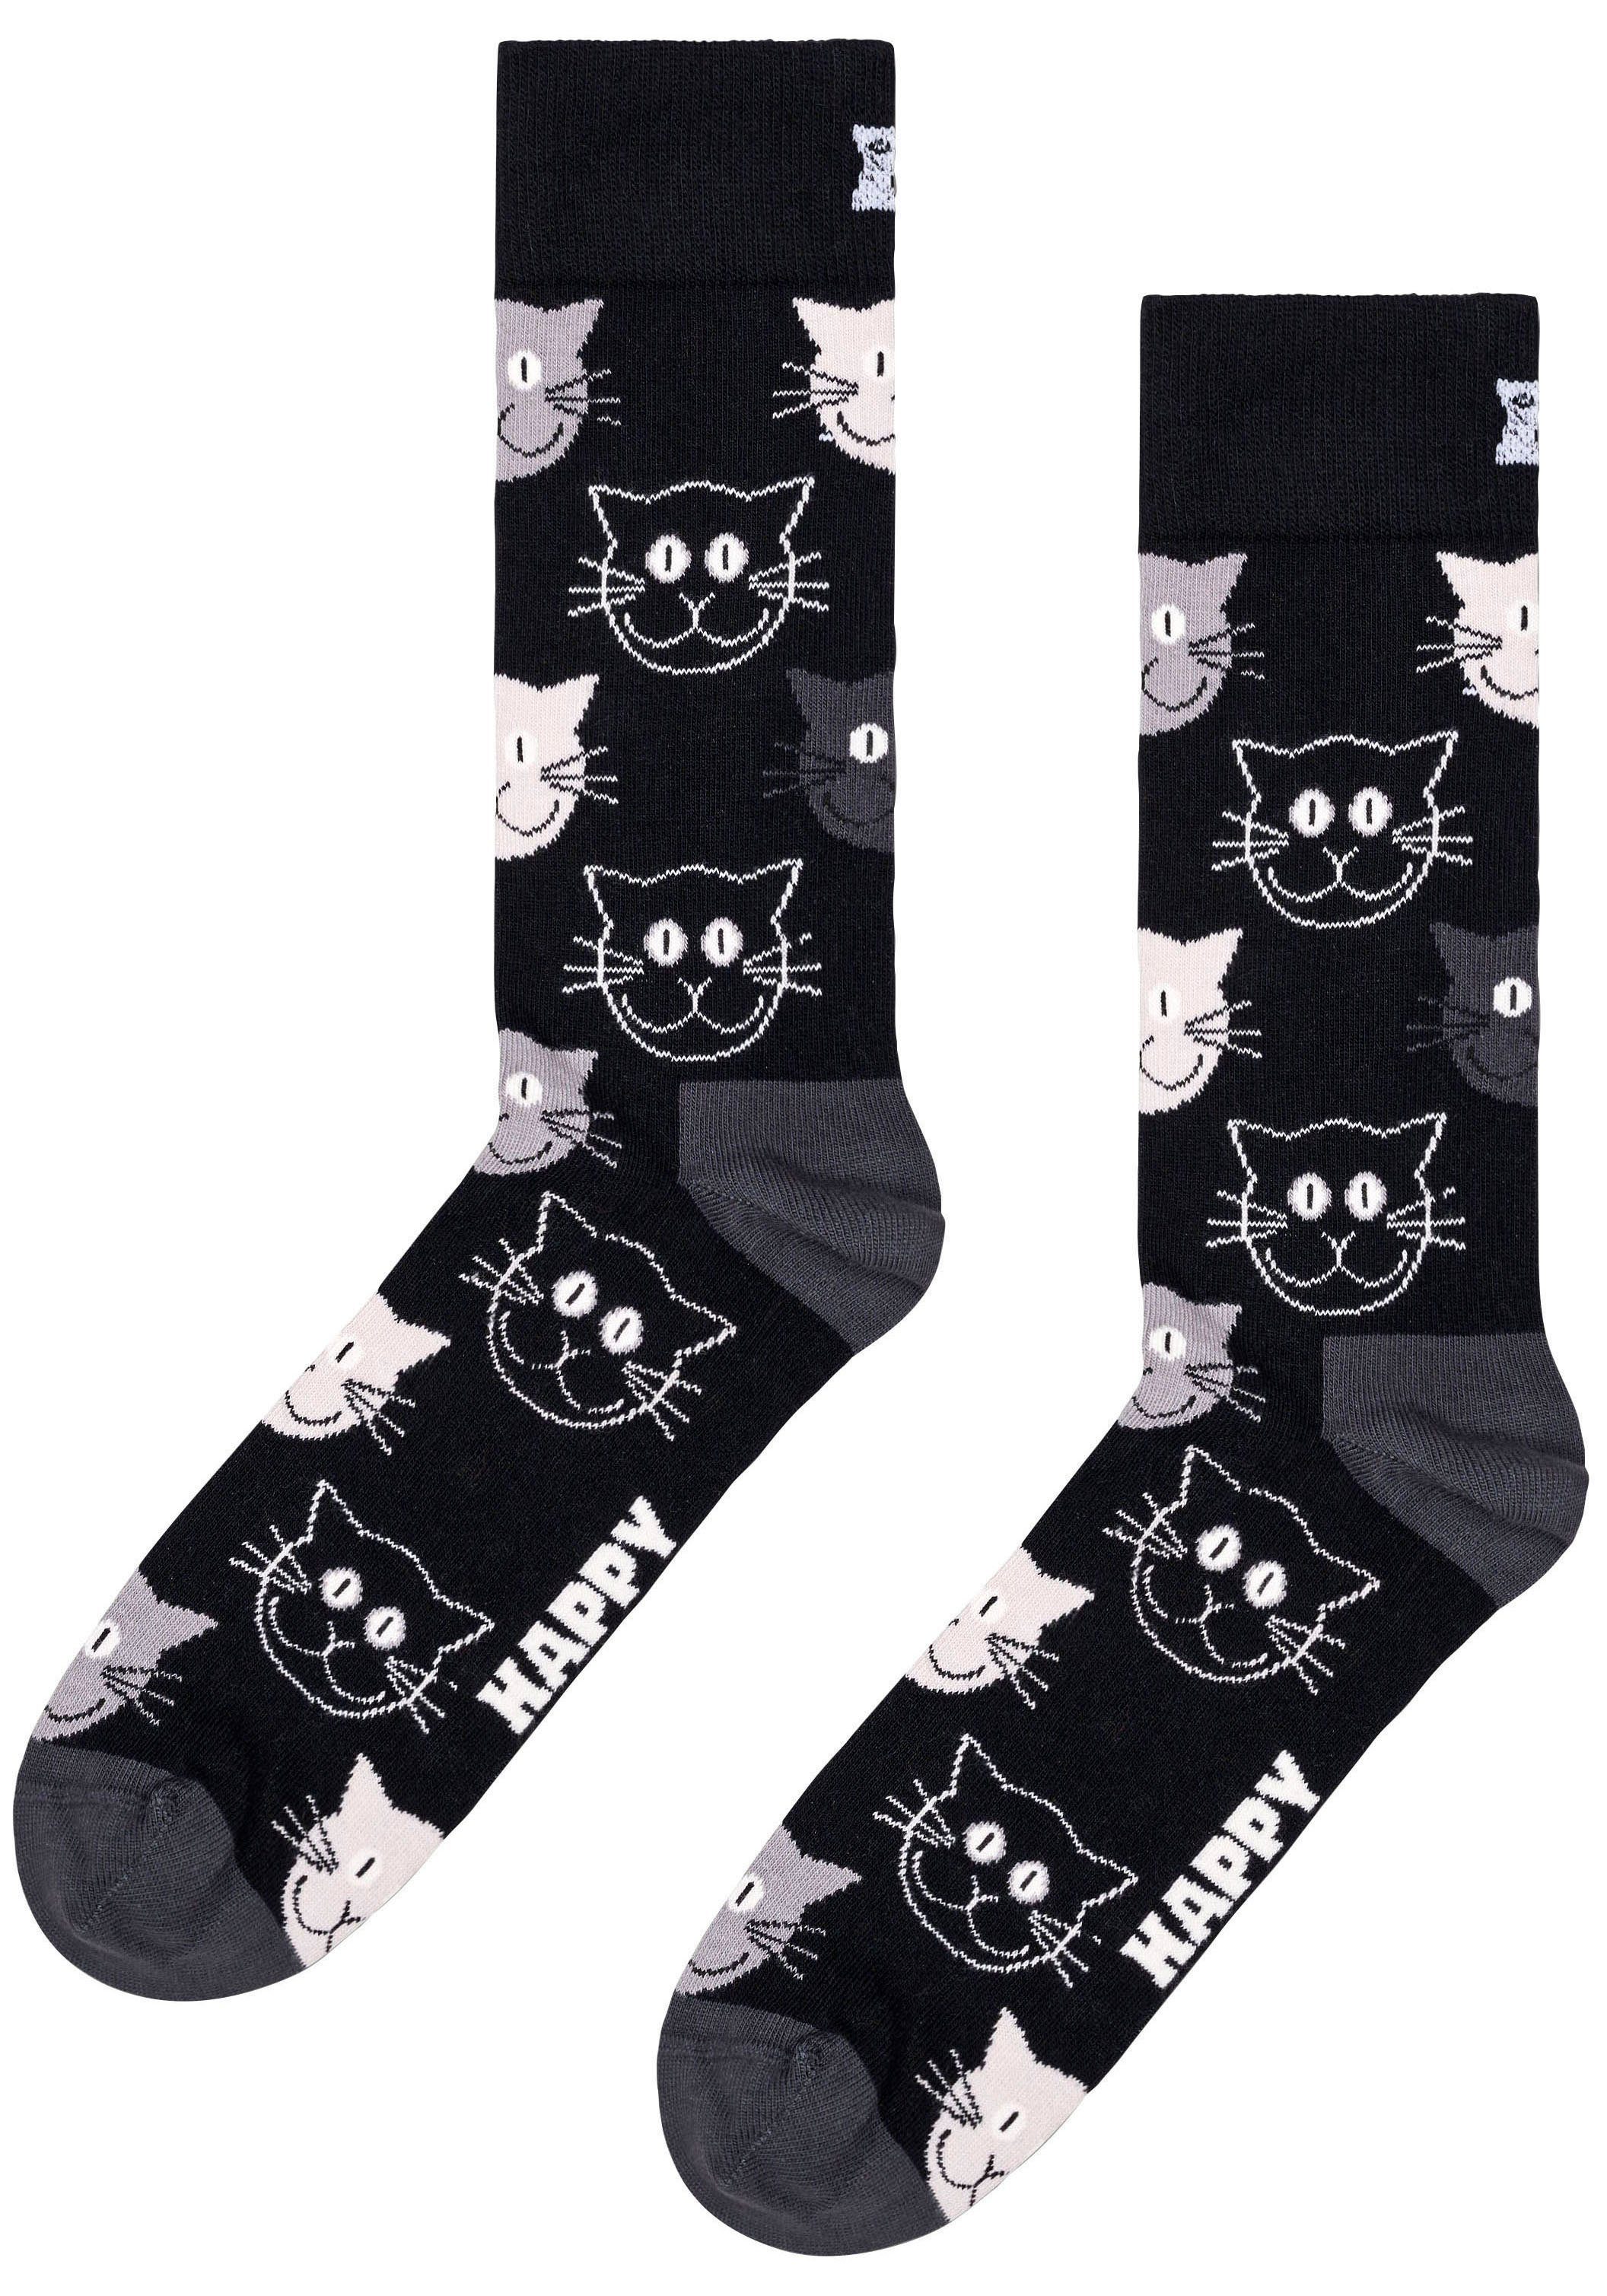 Happy Socks Mixed (Packung, Mixed Cat Socken Socks Gift 2 3-Paar) Cat Set Katzen-Motive 3-Pack